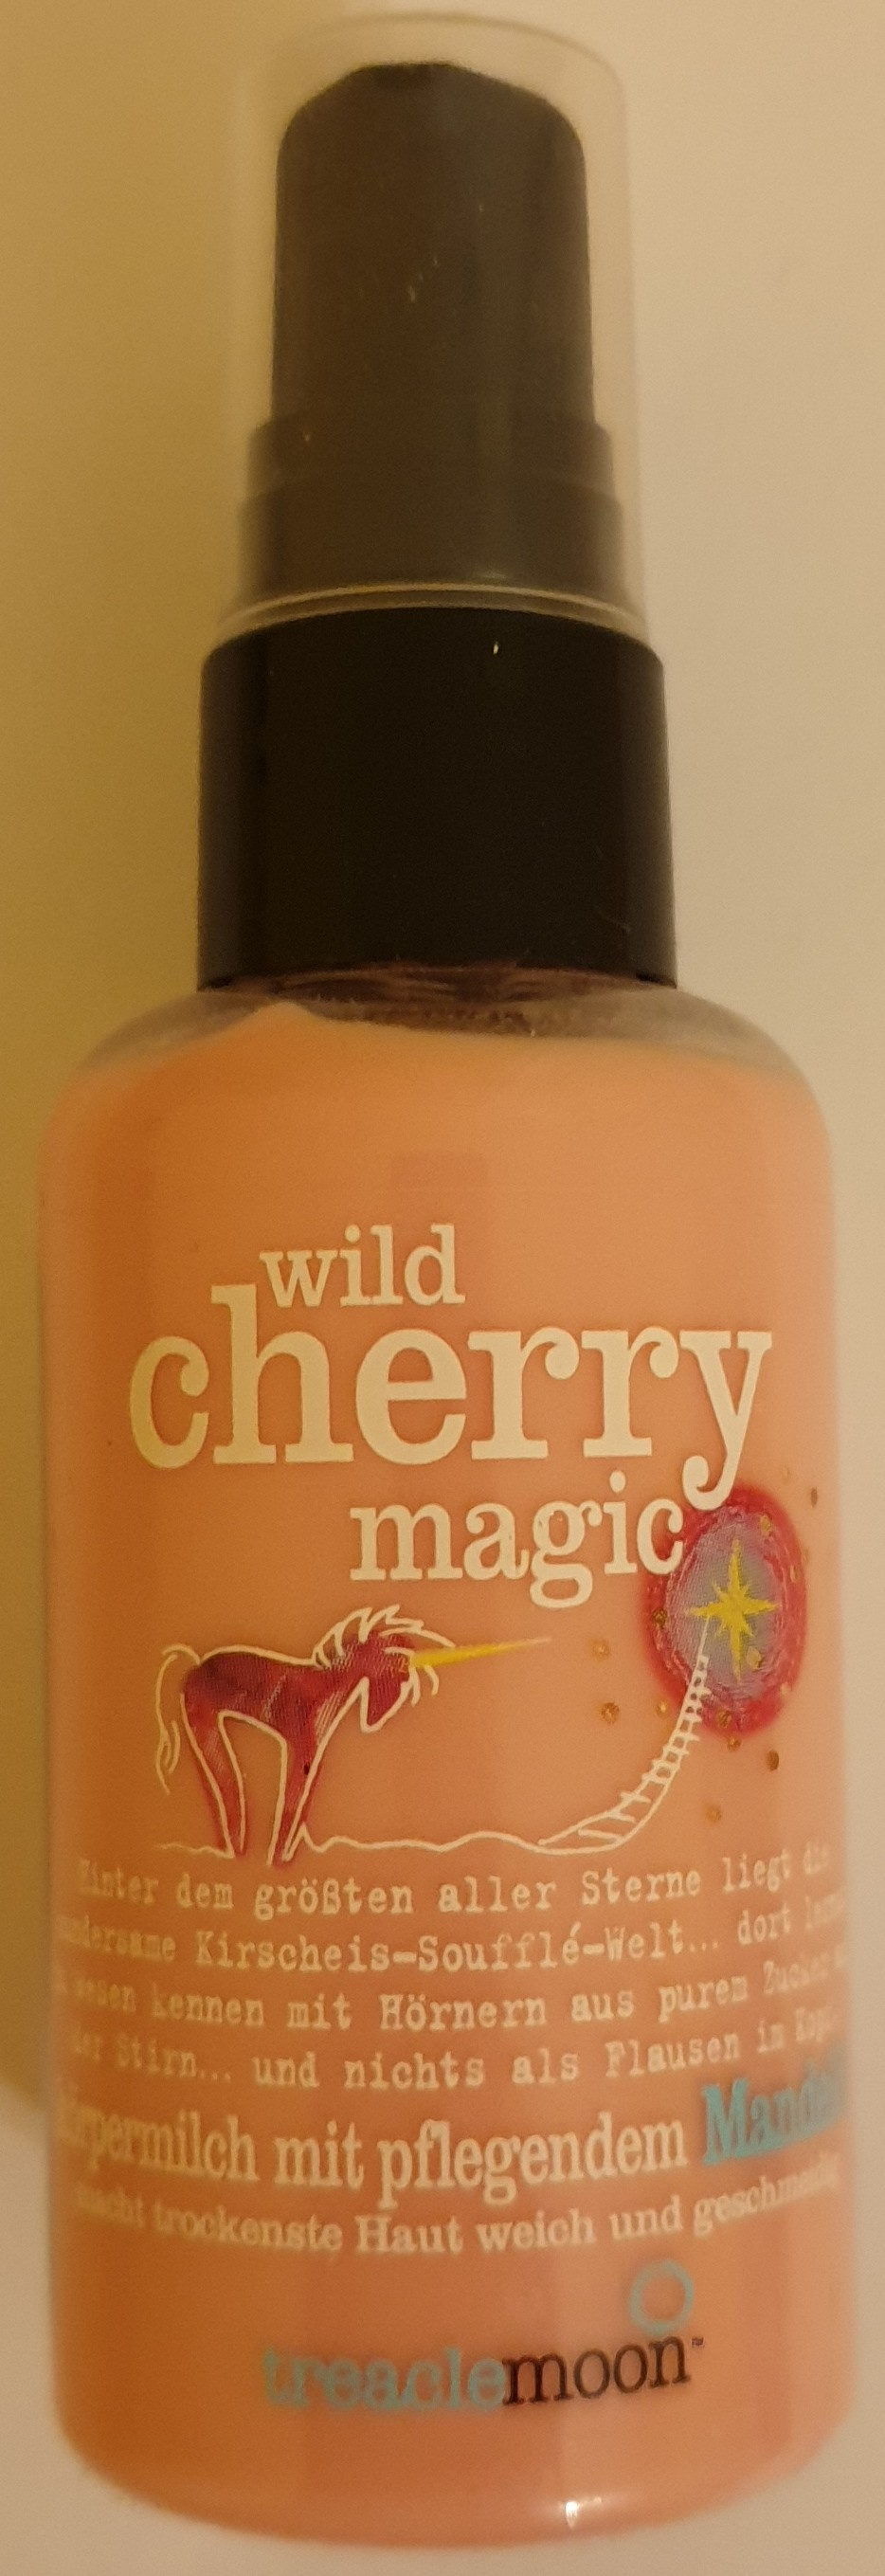 wild cherry magic - Product - de